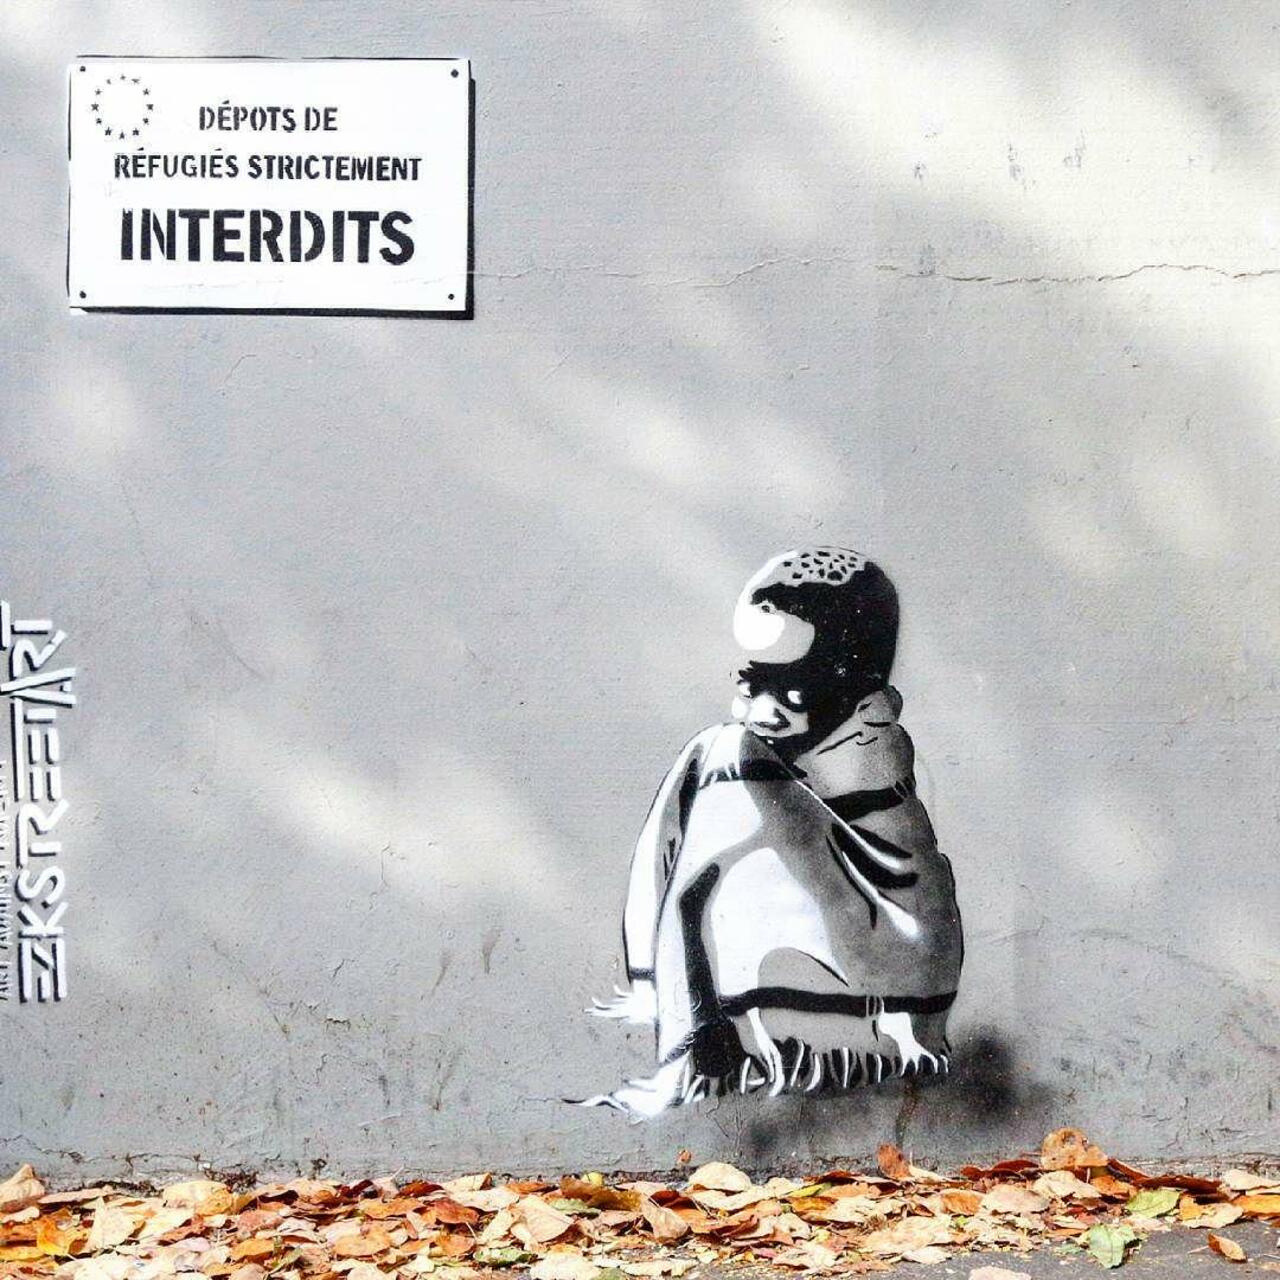 #Paris #graffiti photo by @jpoesse http://ift.tt/1NLDENH #StreetArt http://t.co/vME1VuTQGQ